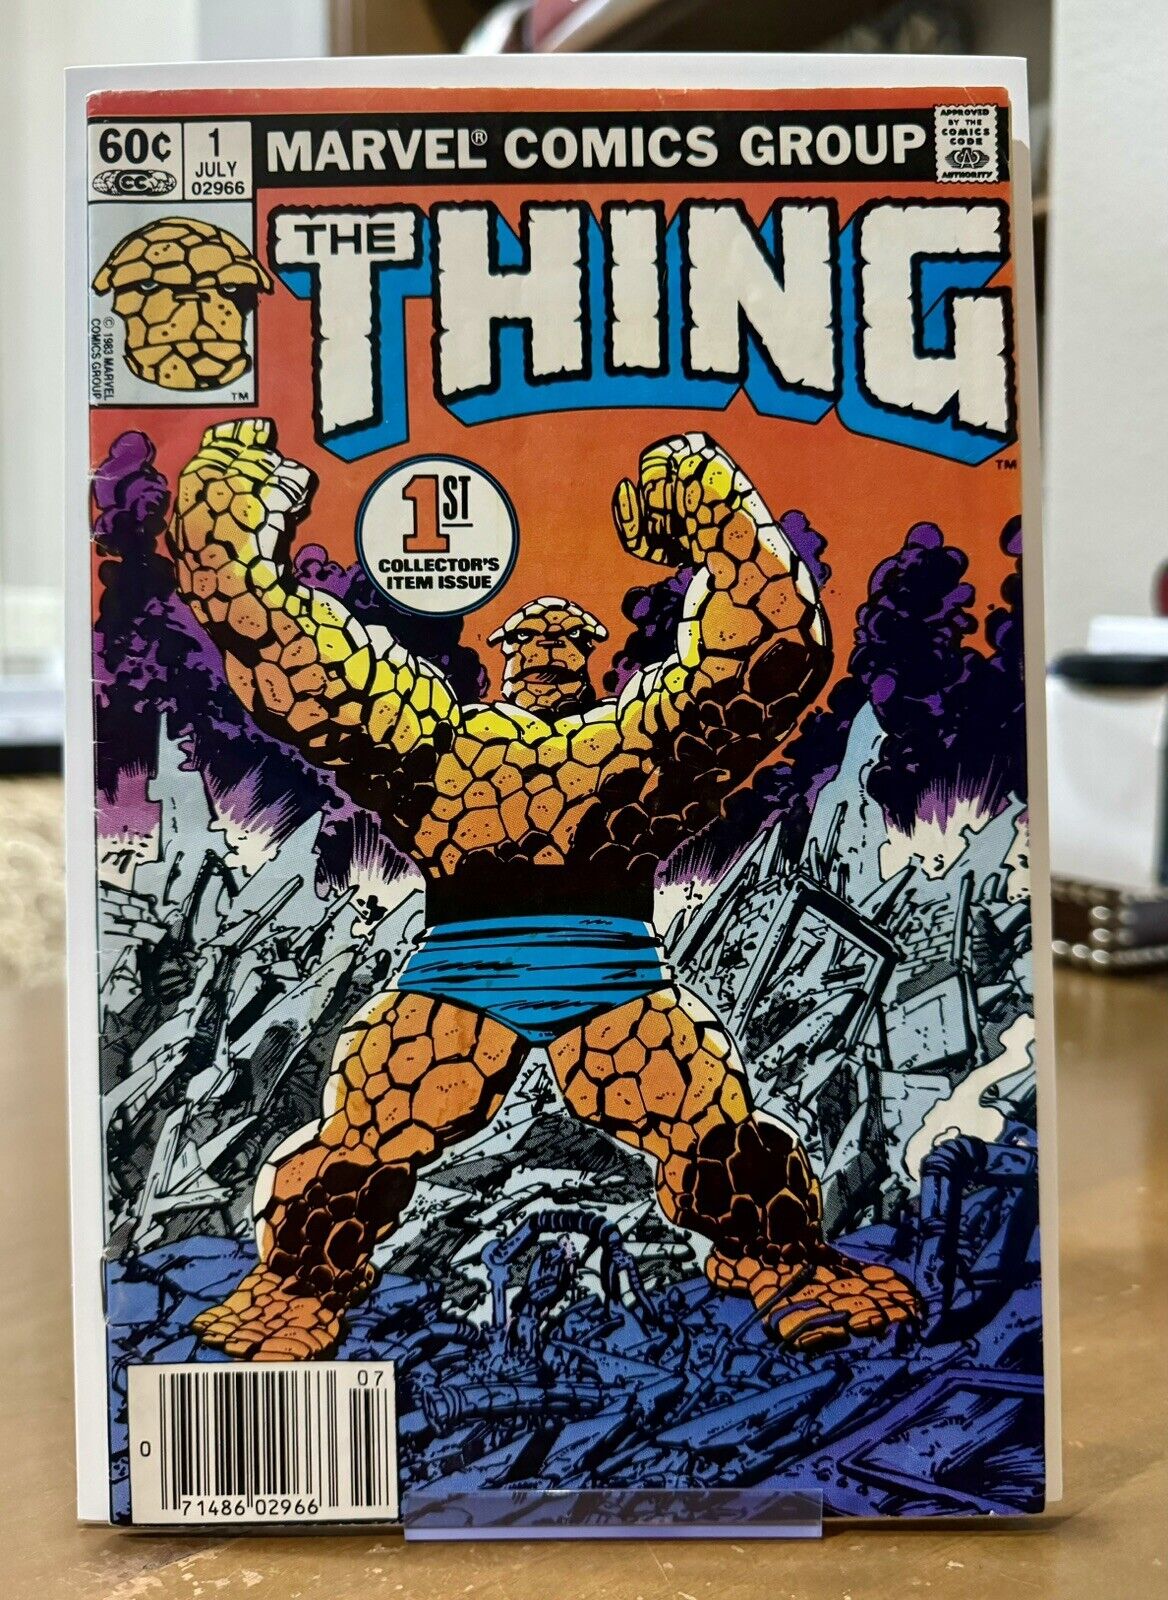 The Thing #1 1st Issue John Byrne (Marvel Comics 1983)